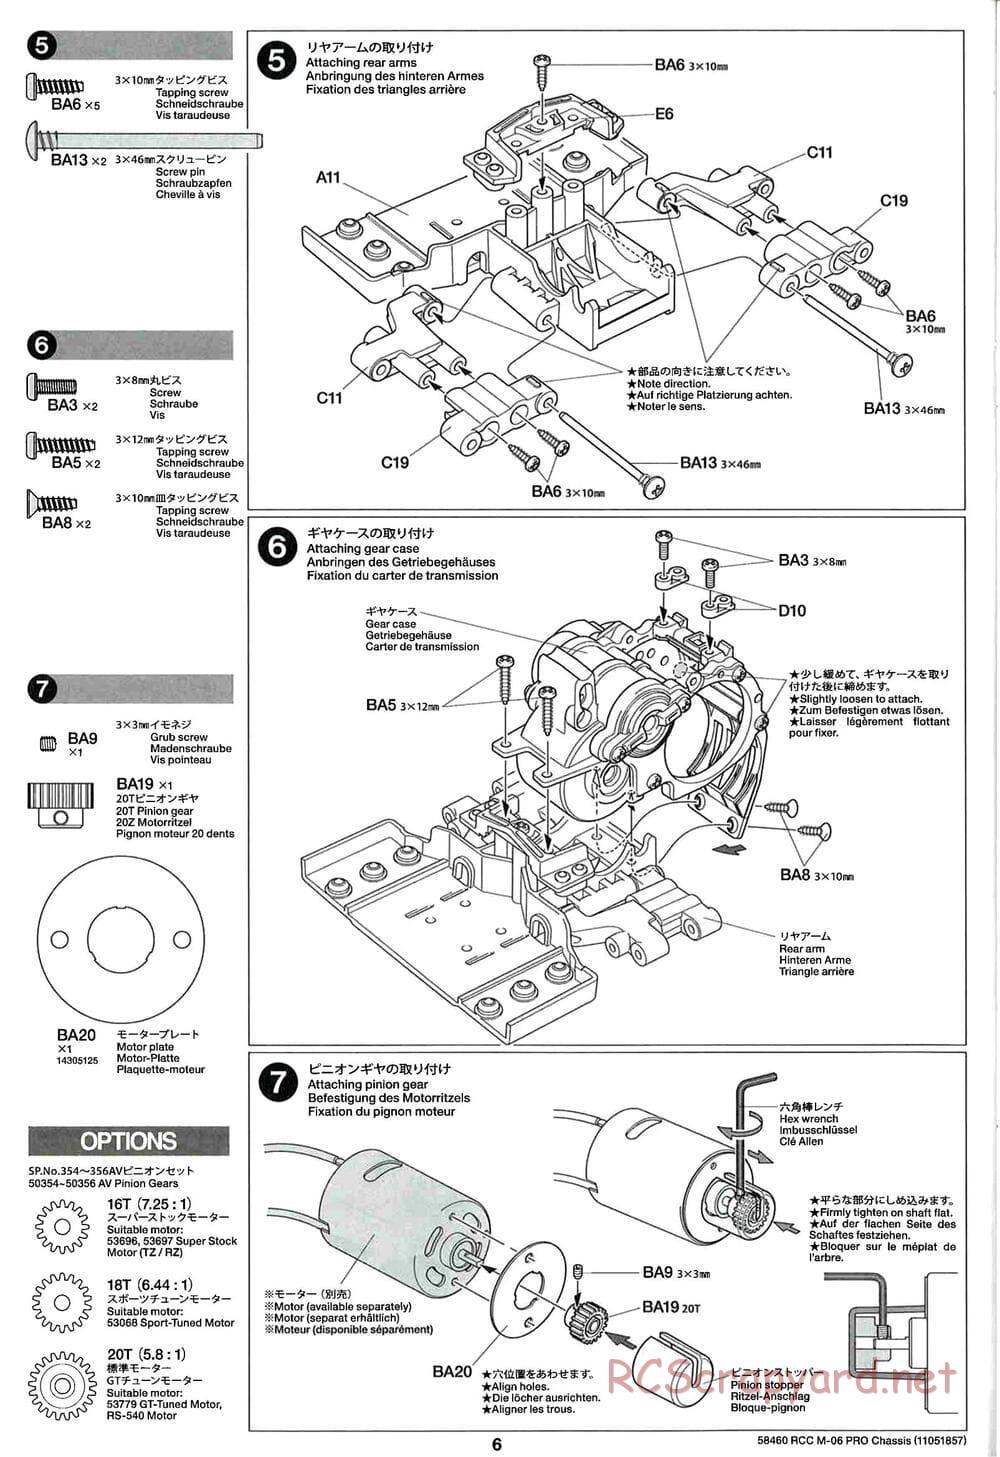 Tamiya - M-06 Pro Chassis - Manual - Page 6